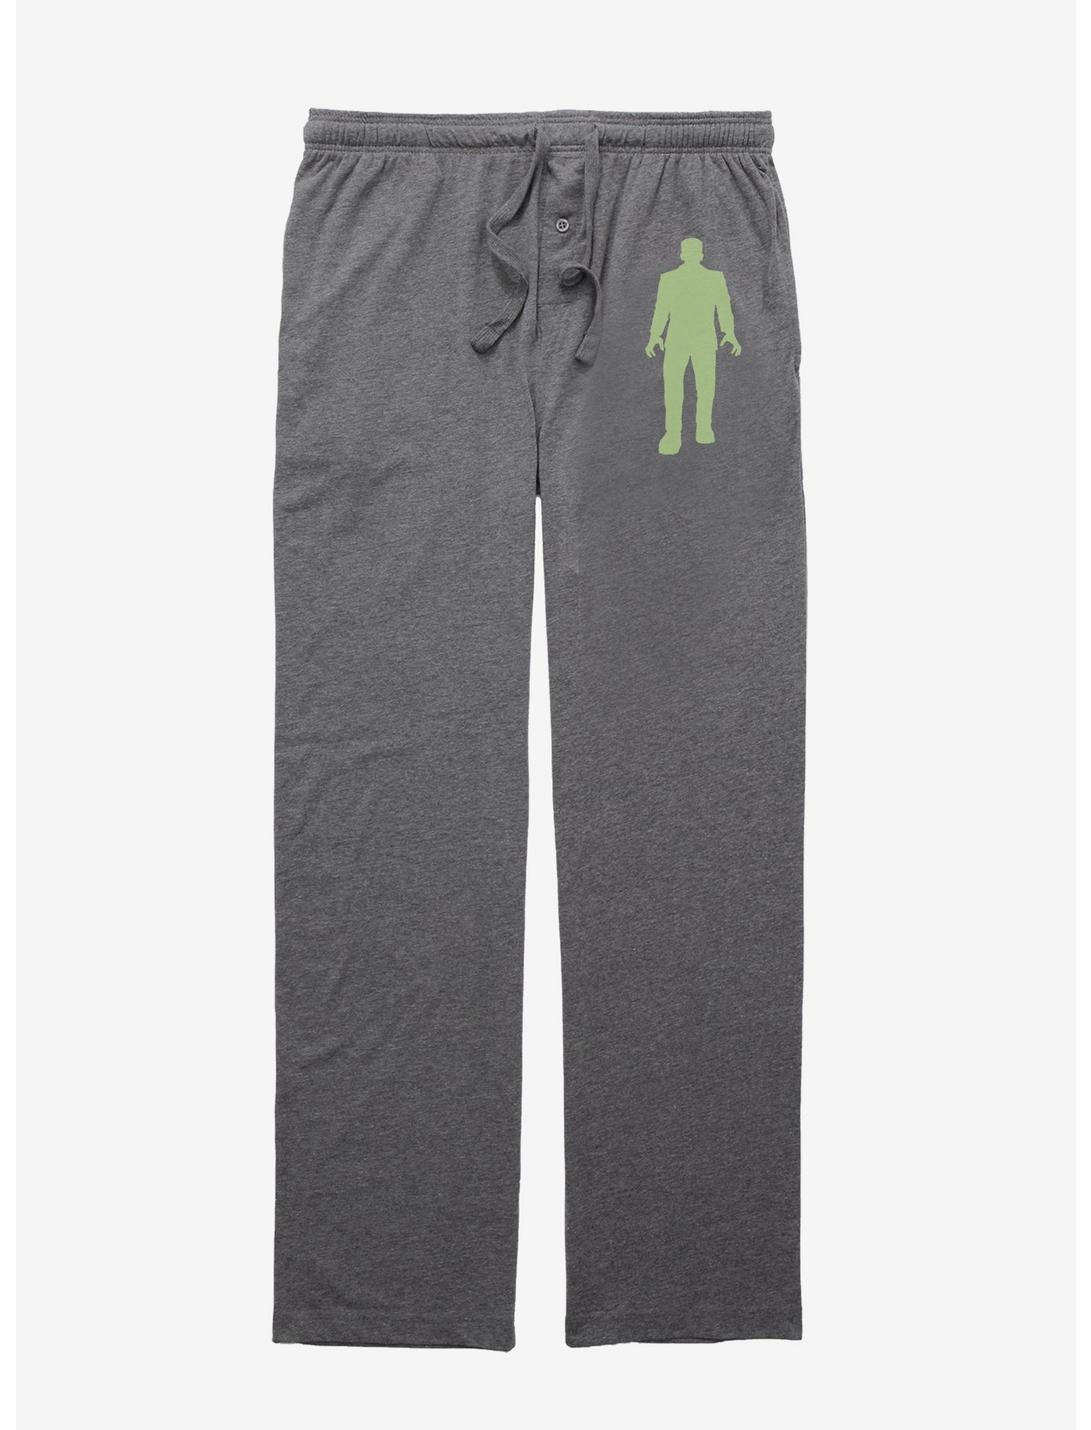 Frankenstein Silhouette Pajama Pants, , hi-res